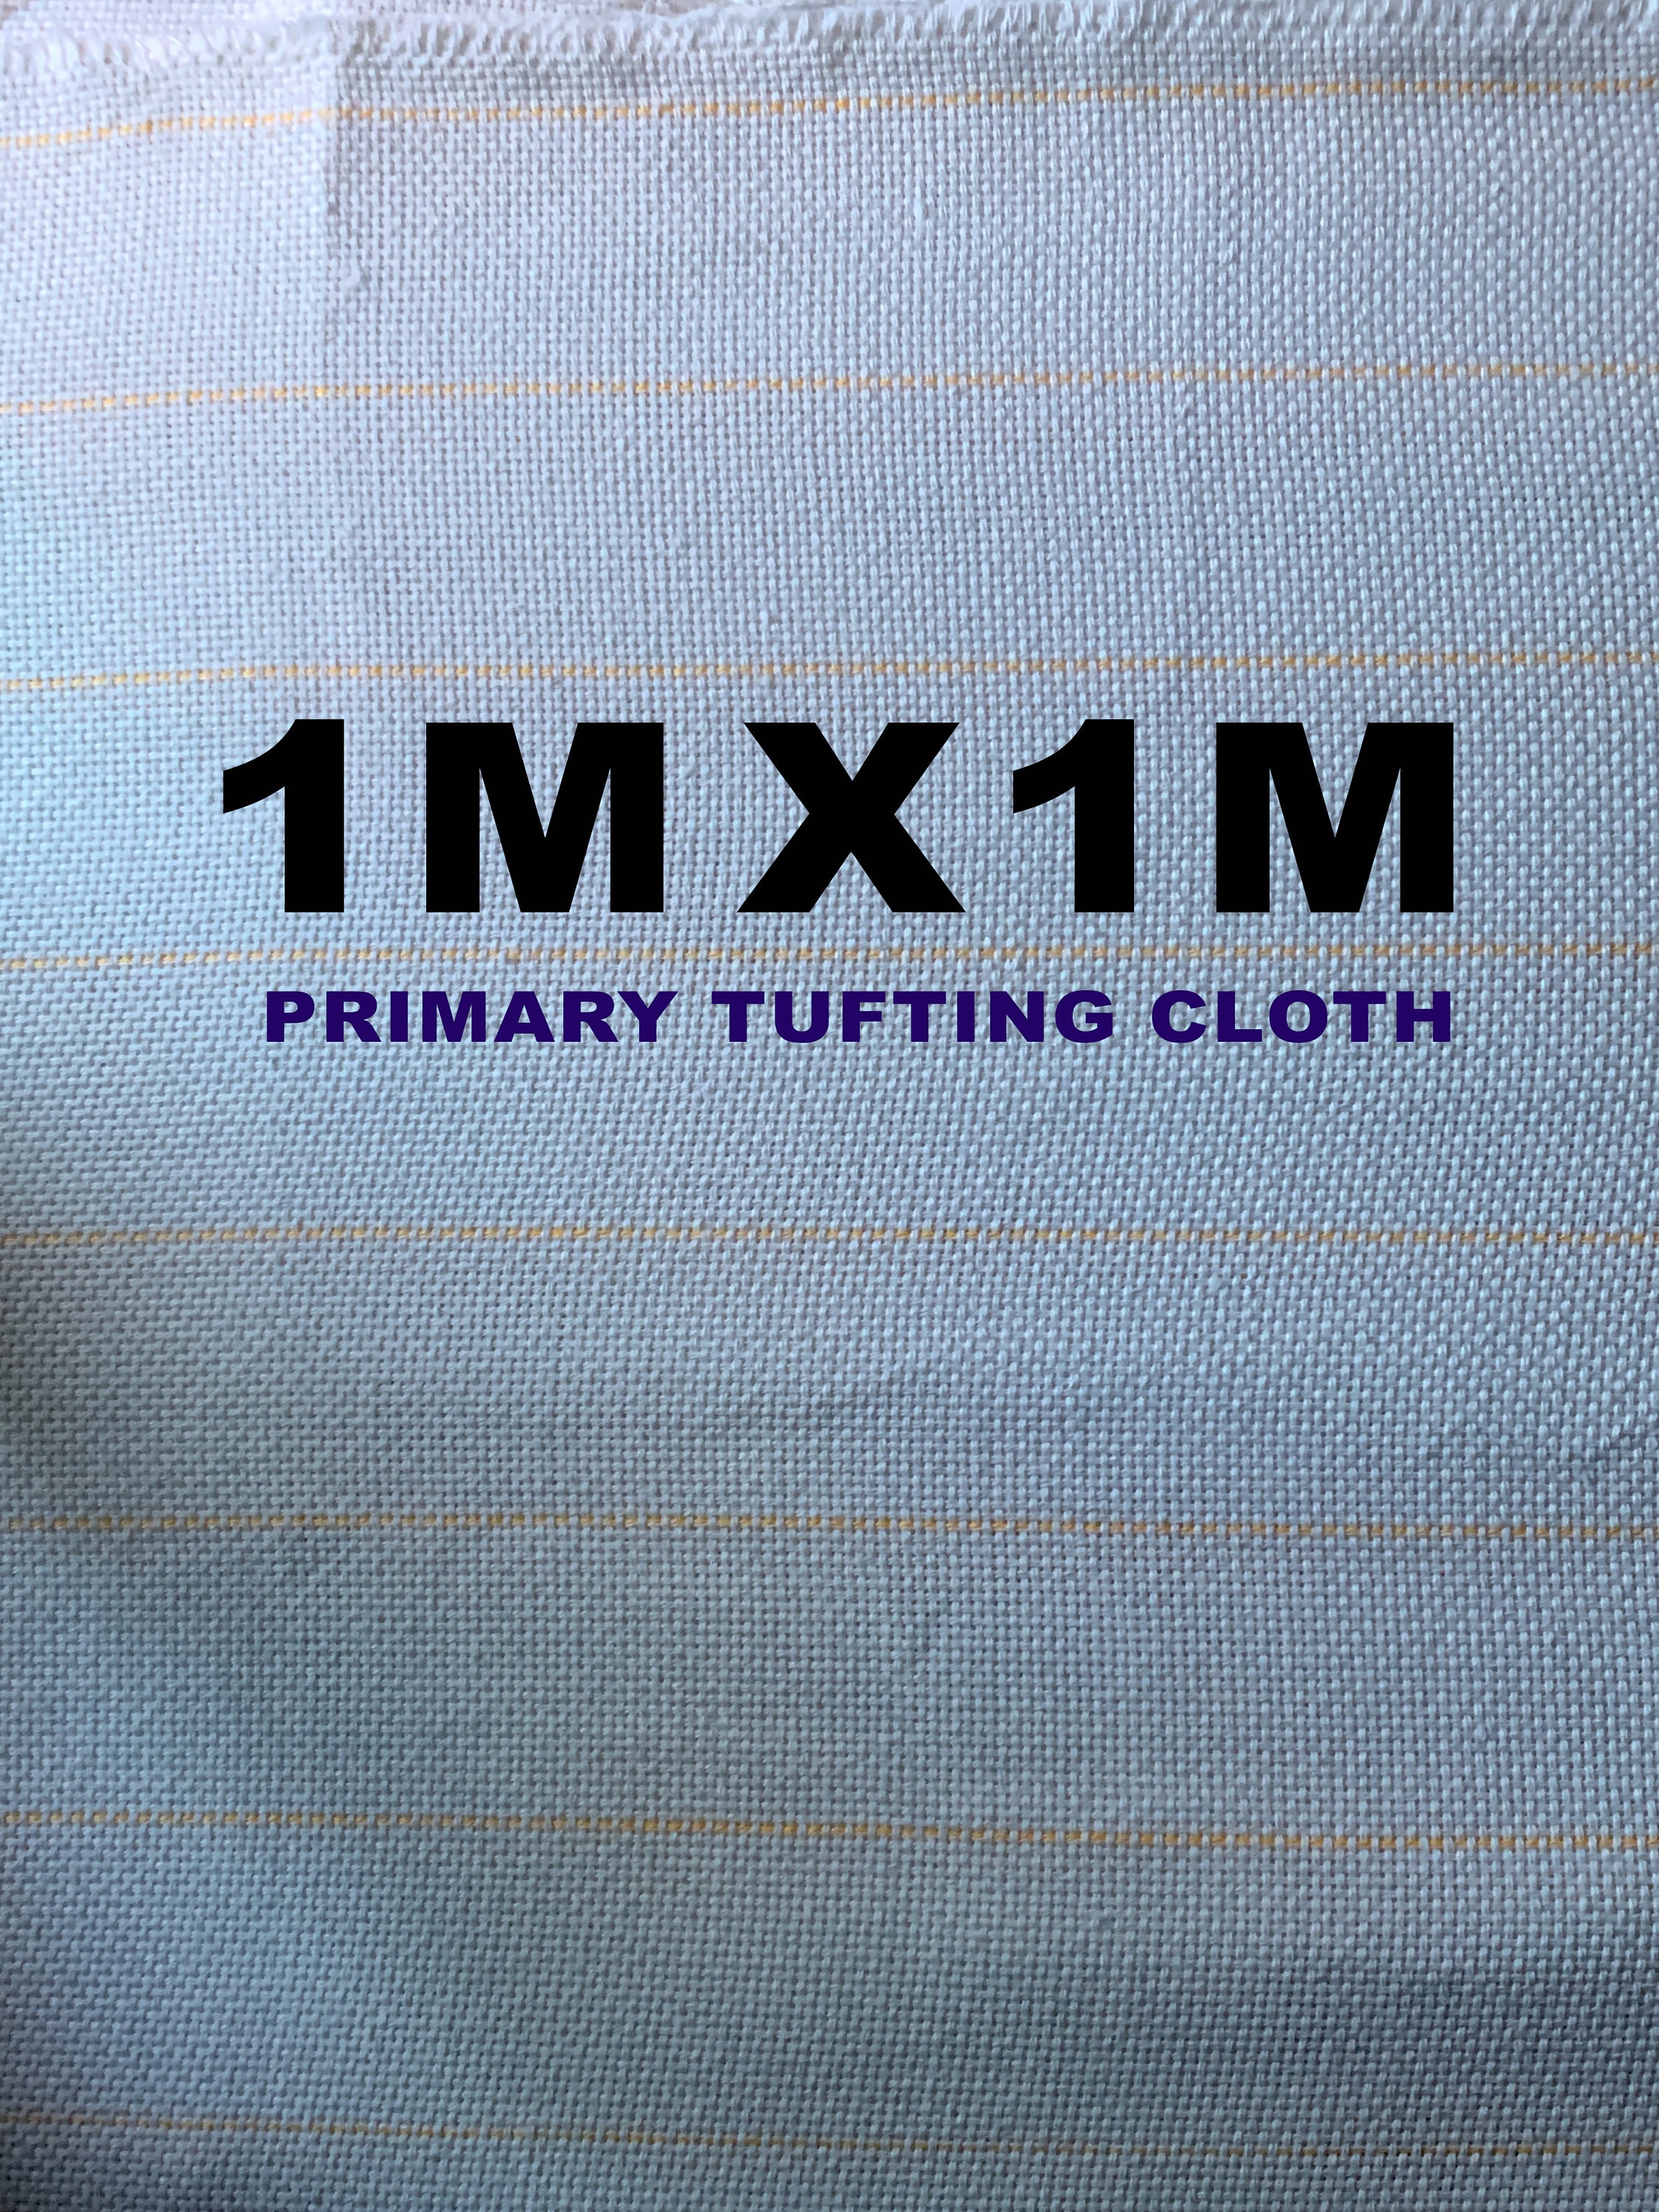 PREMIUM Rug Backing Fabric, 1/2 YARD, Rug Tufting Canvas, Tufting